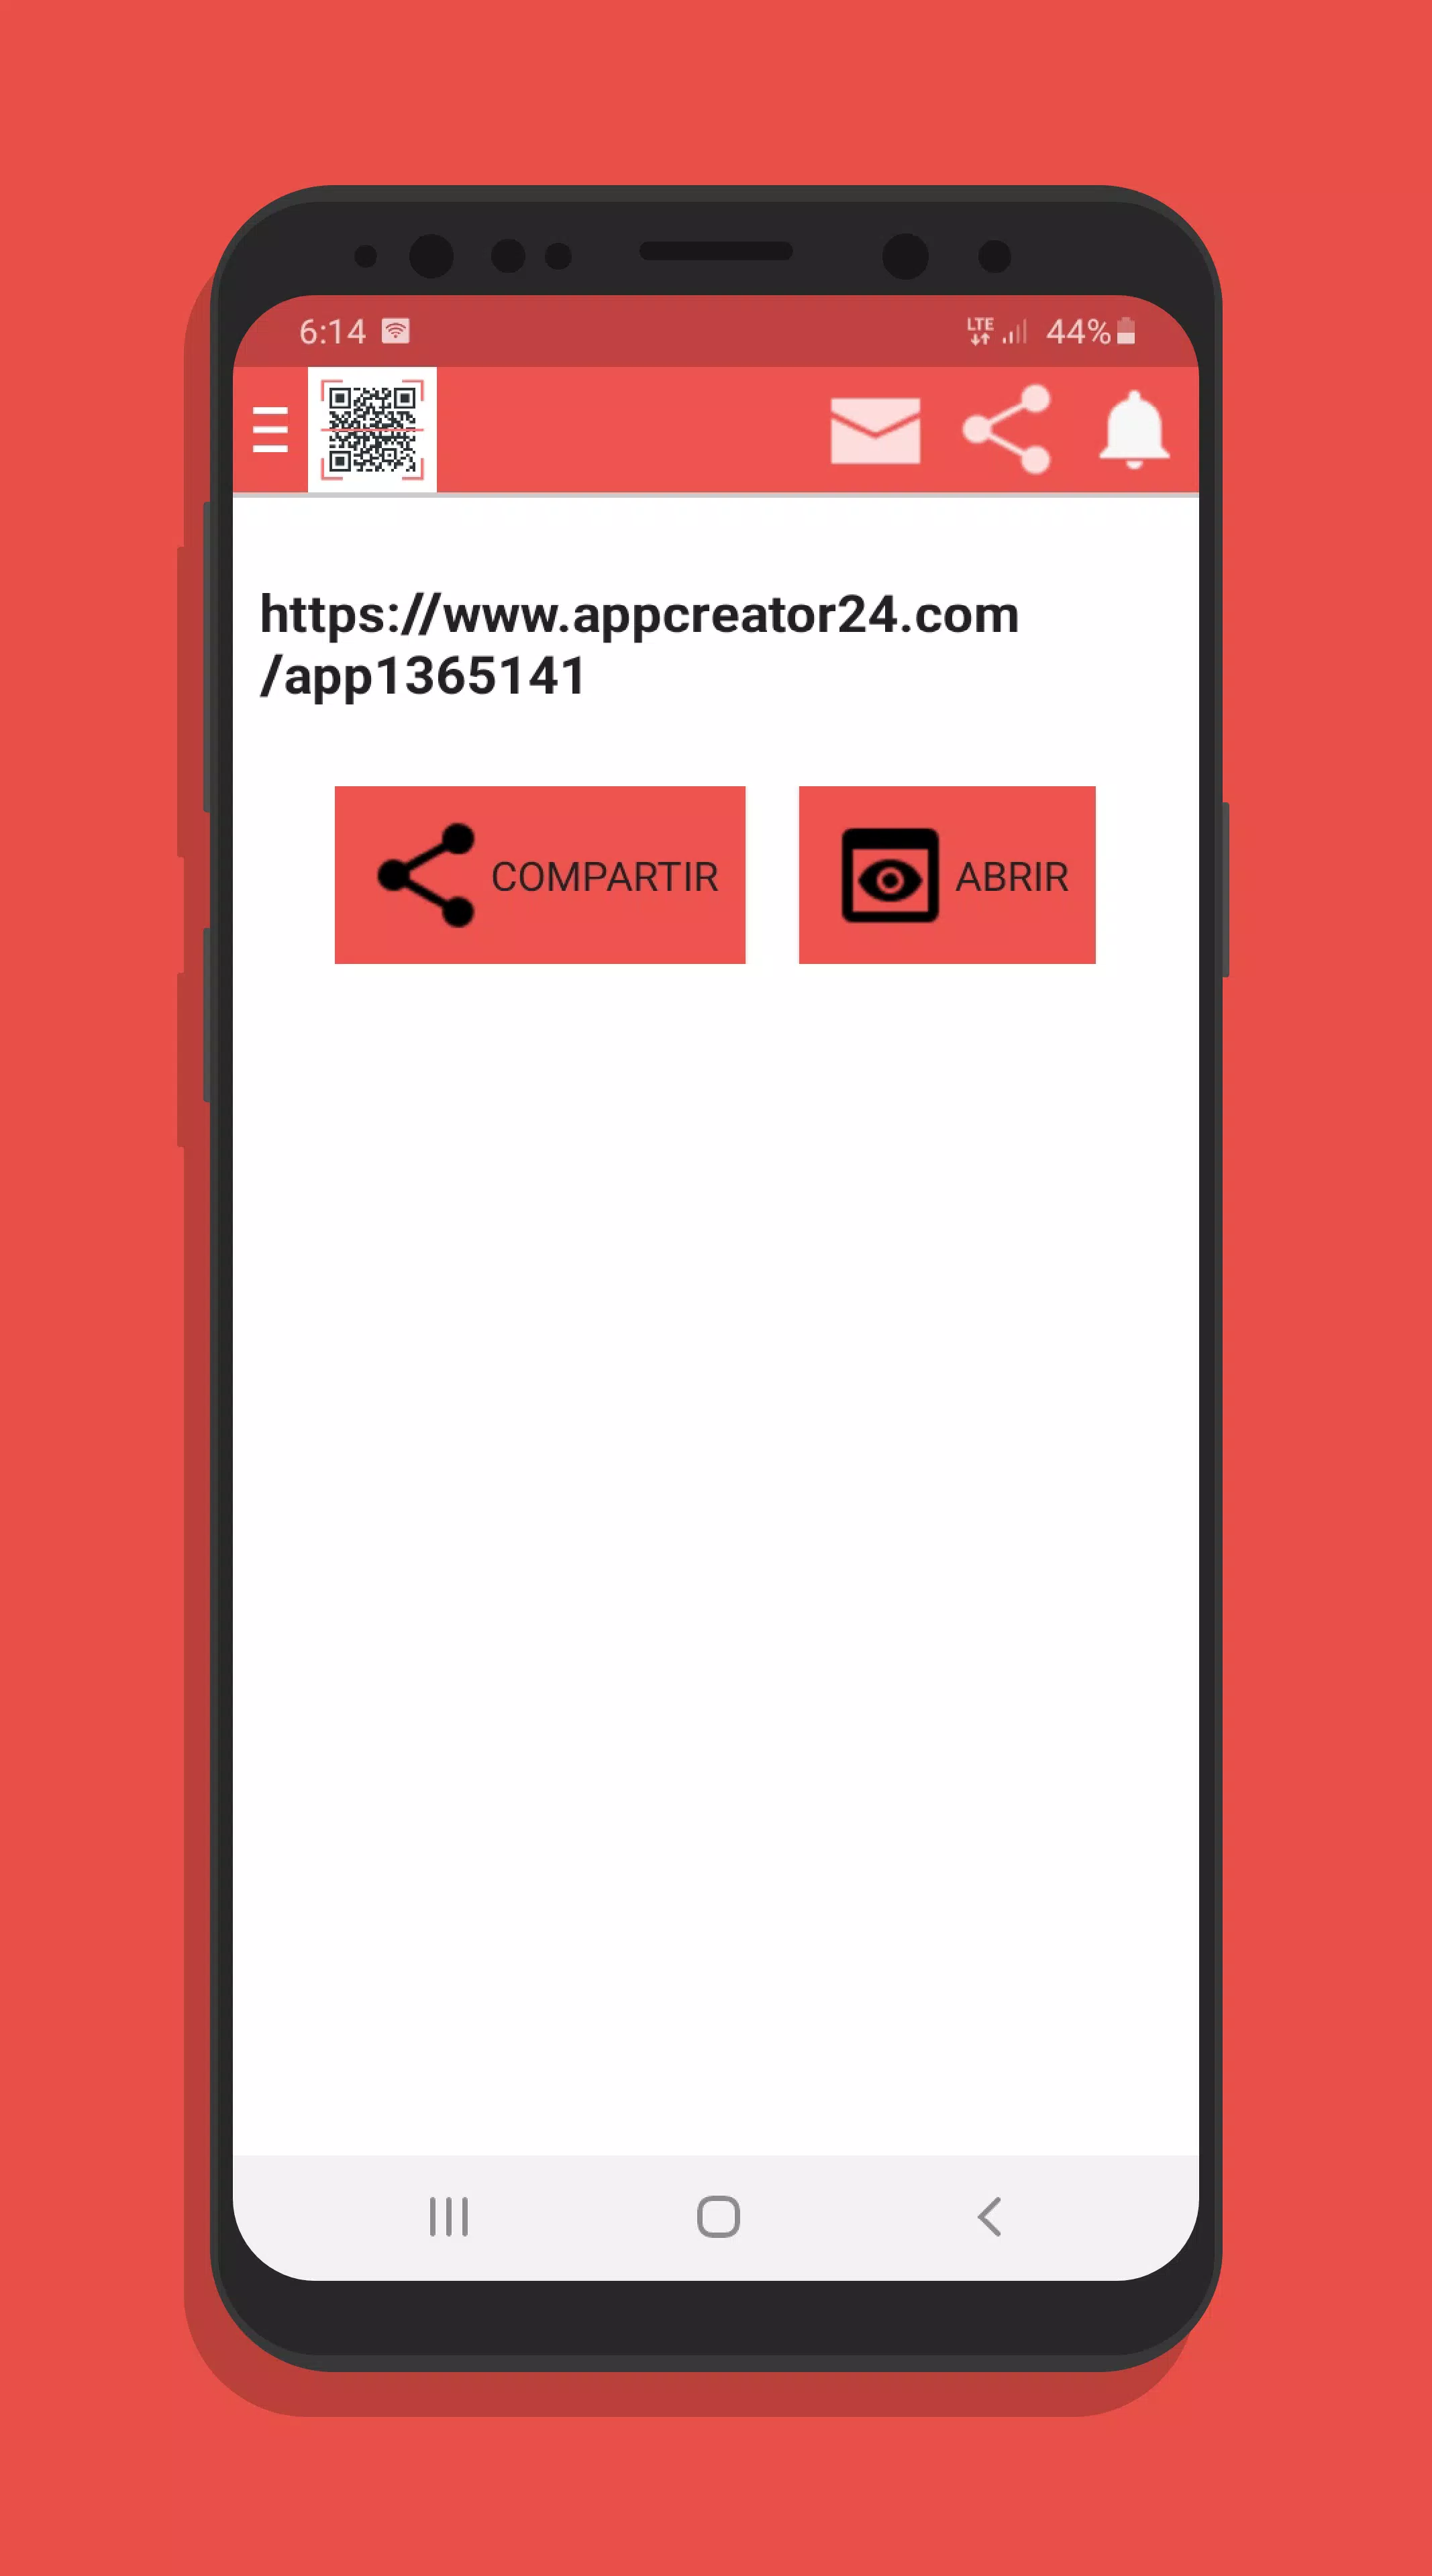 Escanear Códigos QR for Android - APK Download